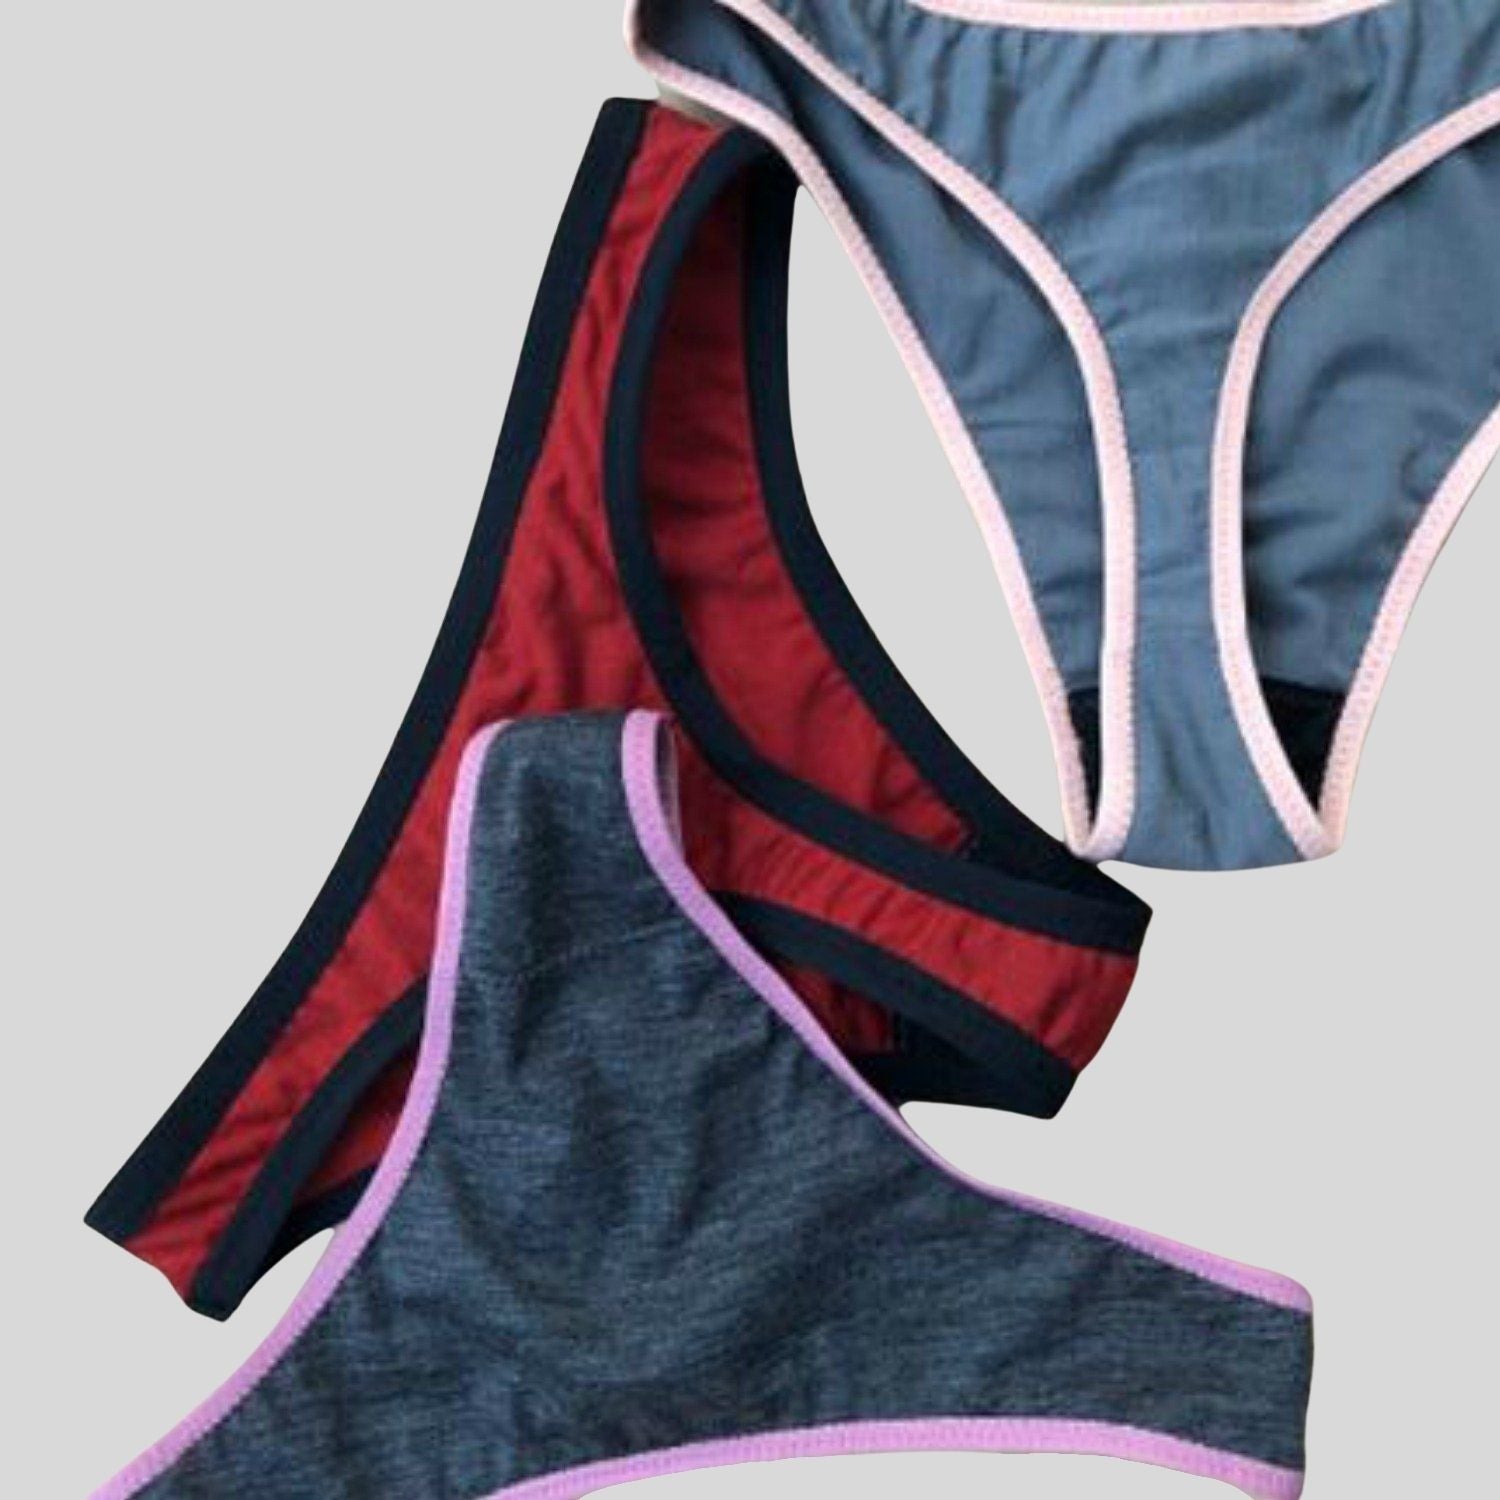 6 Womens Cotton Thongs Sport Underwear G String Dark Colors Panties Plus  Size 2X